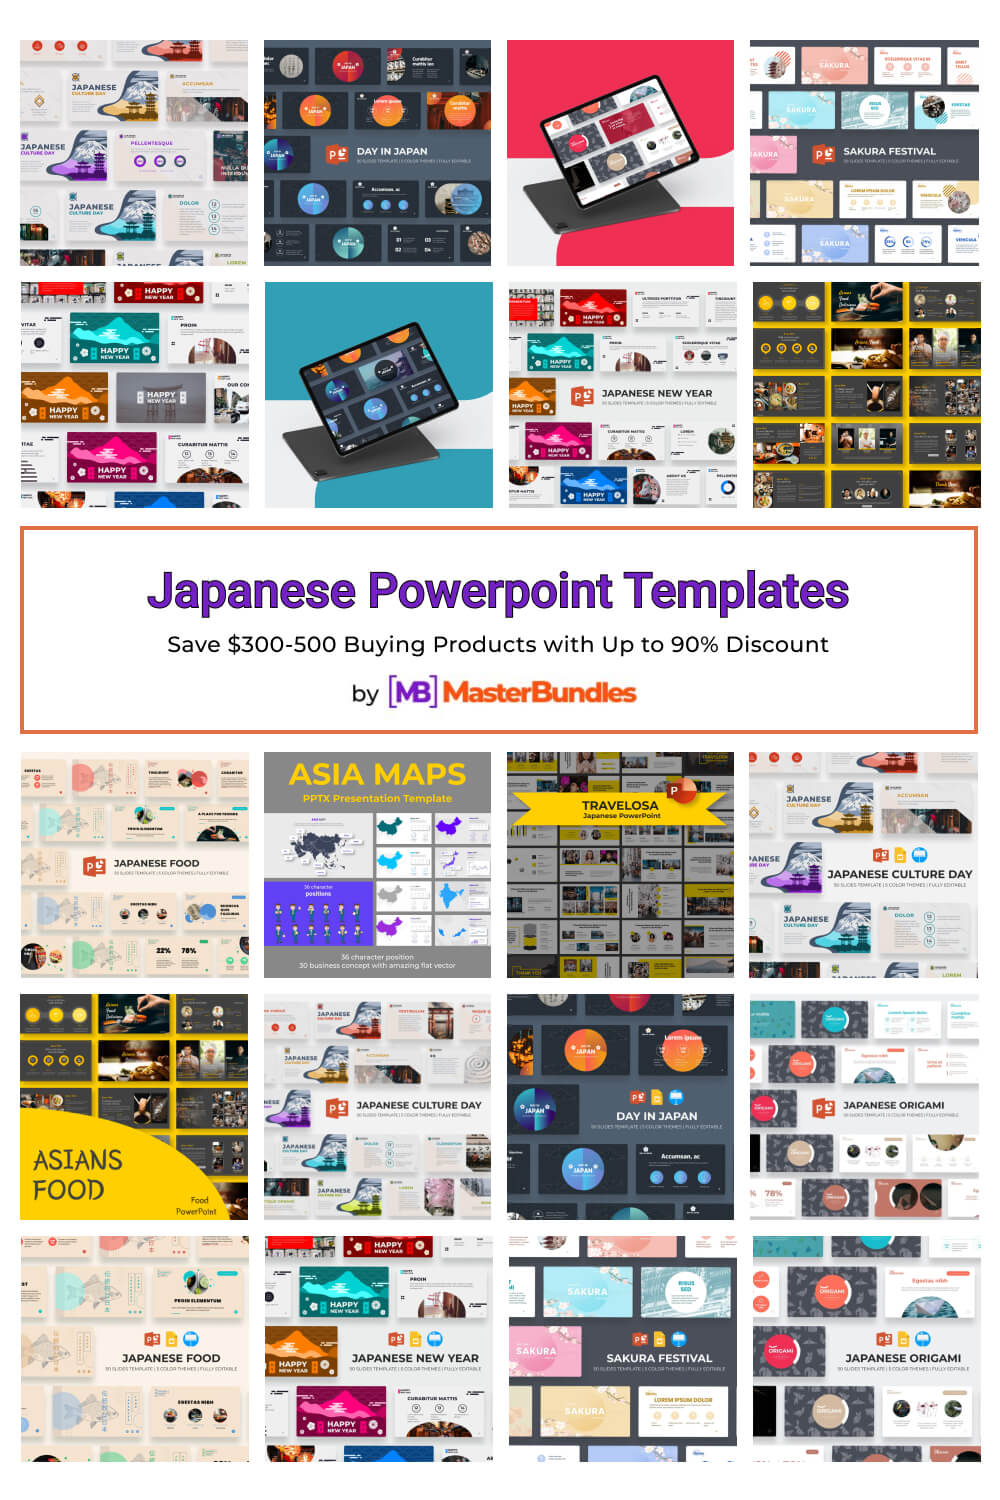 japanese powerpoint templates pinterest image.